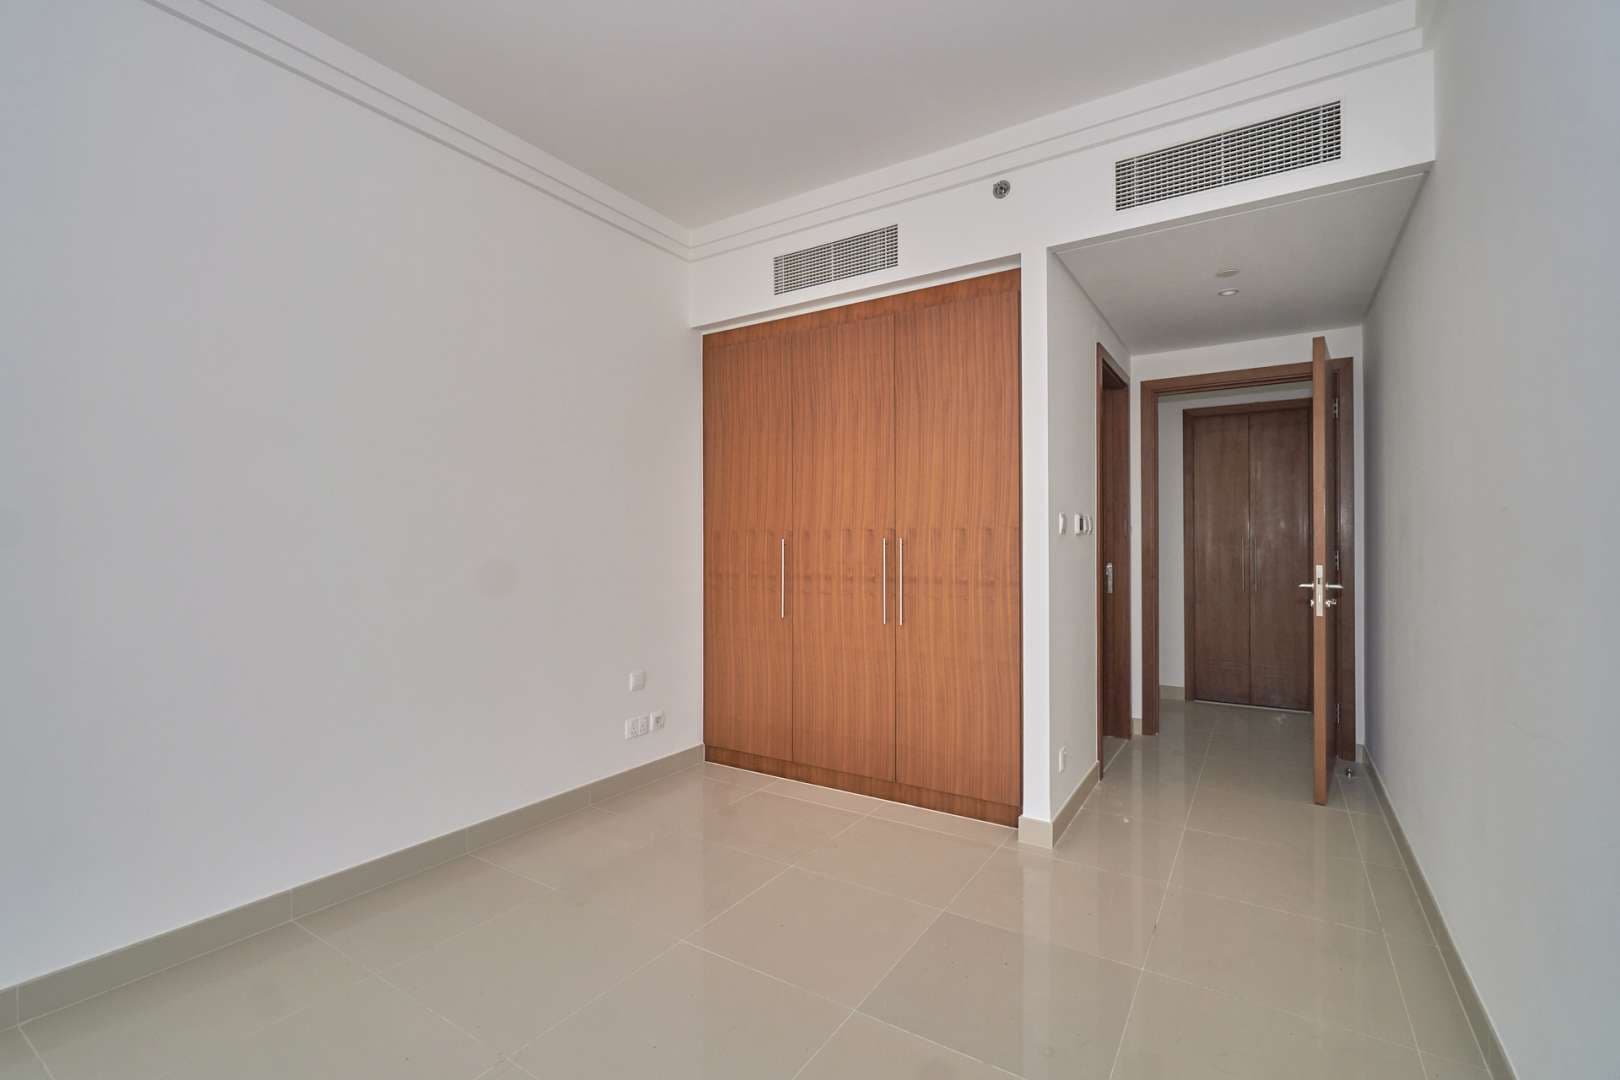 1 Bedroom Apartment For Sale Boulevard Point Lp08214 7e9263a9300efc0.jpg